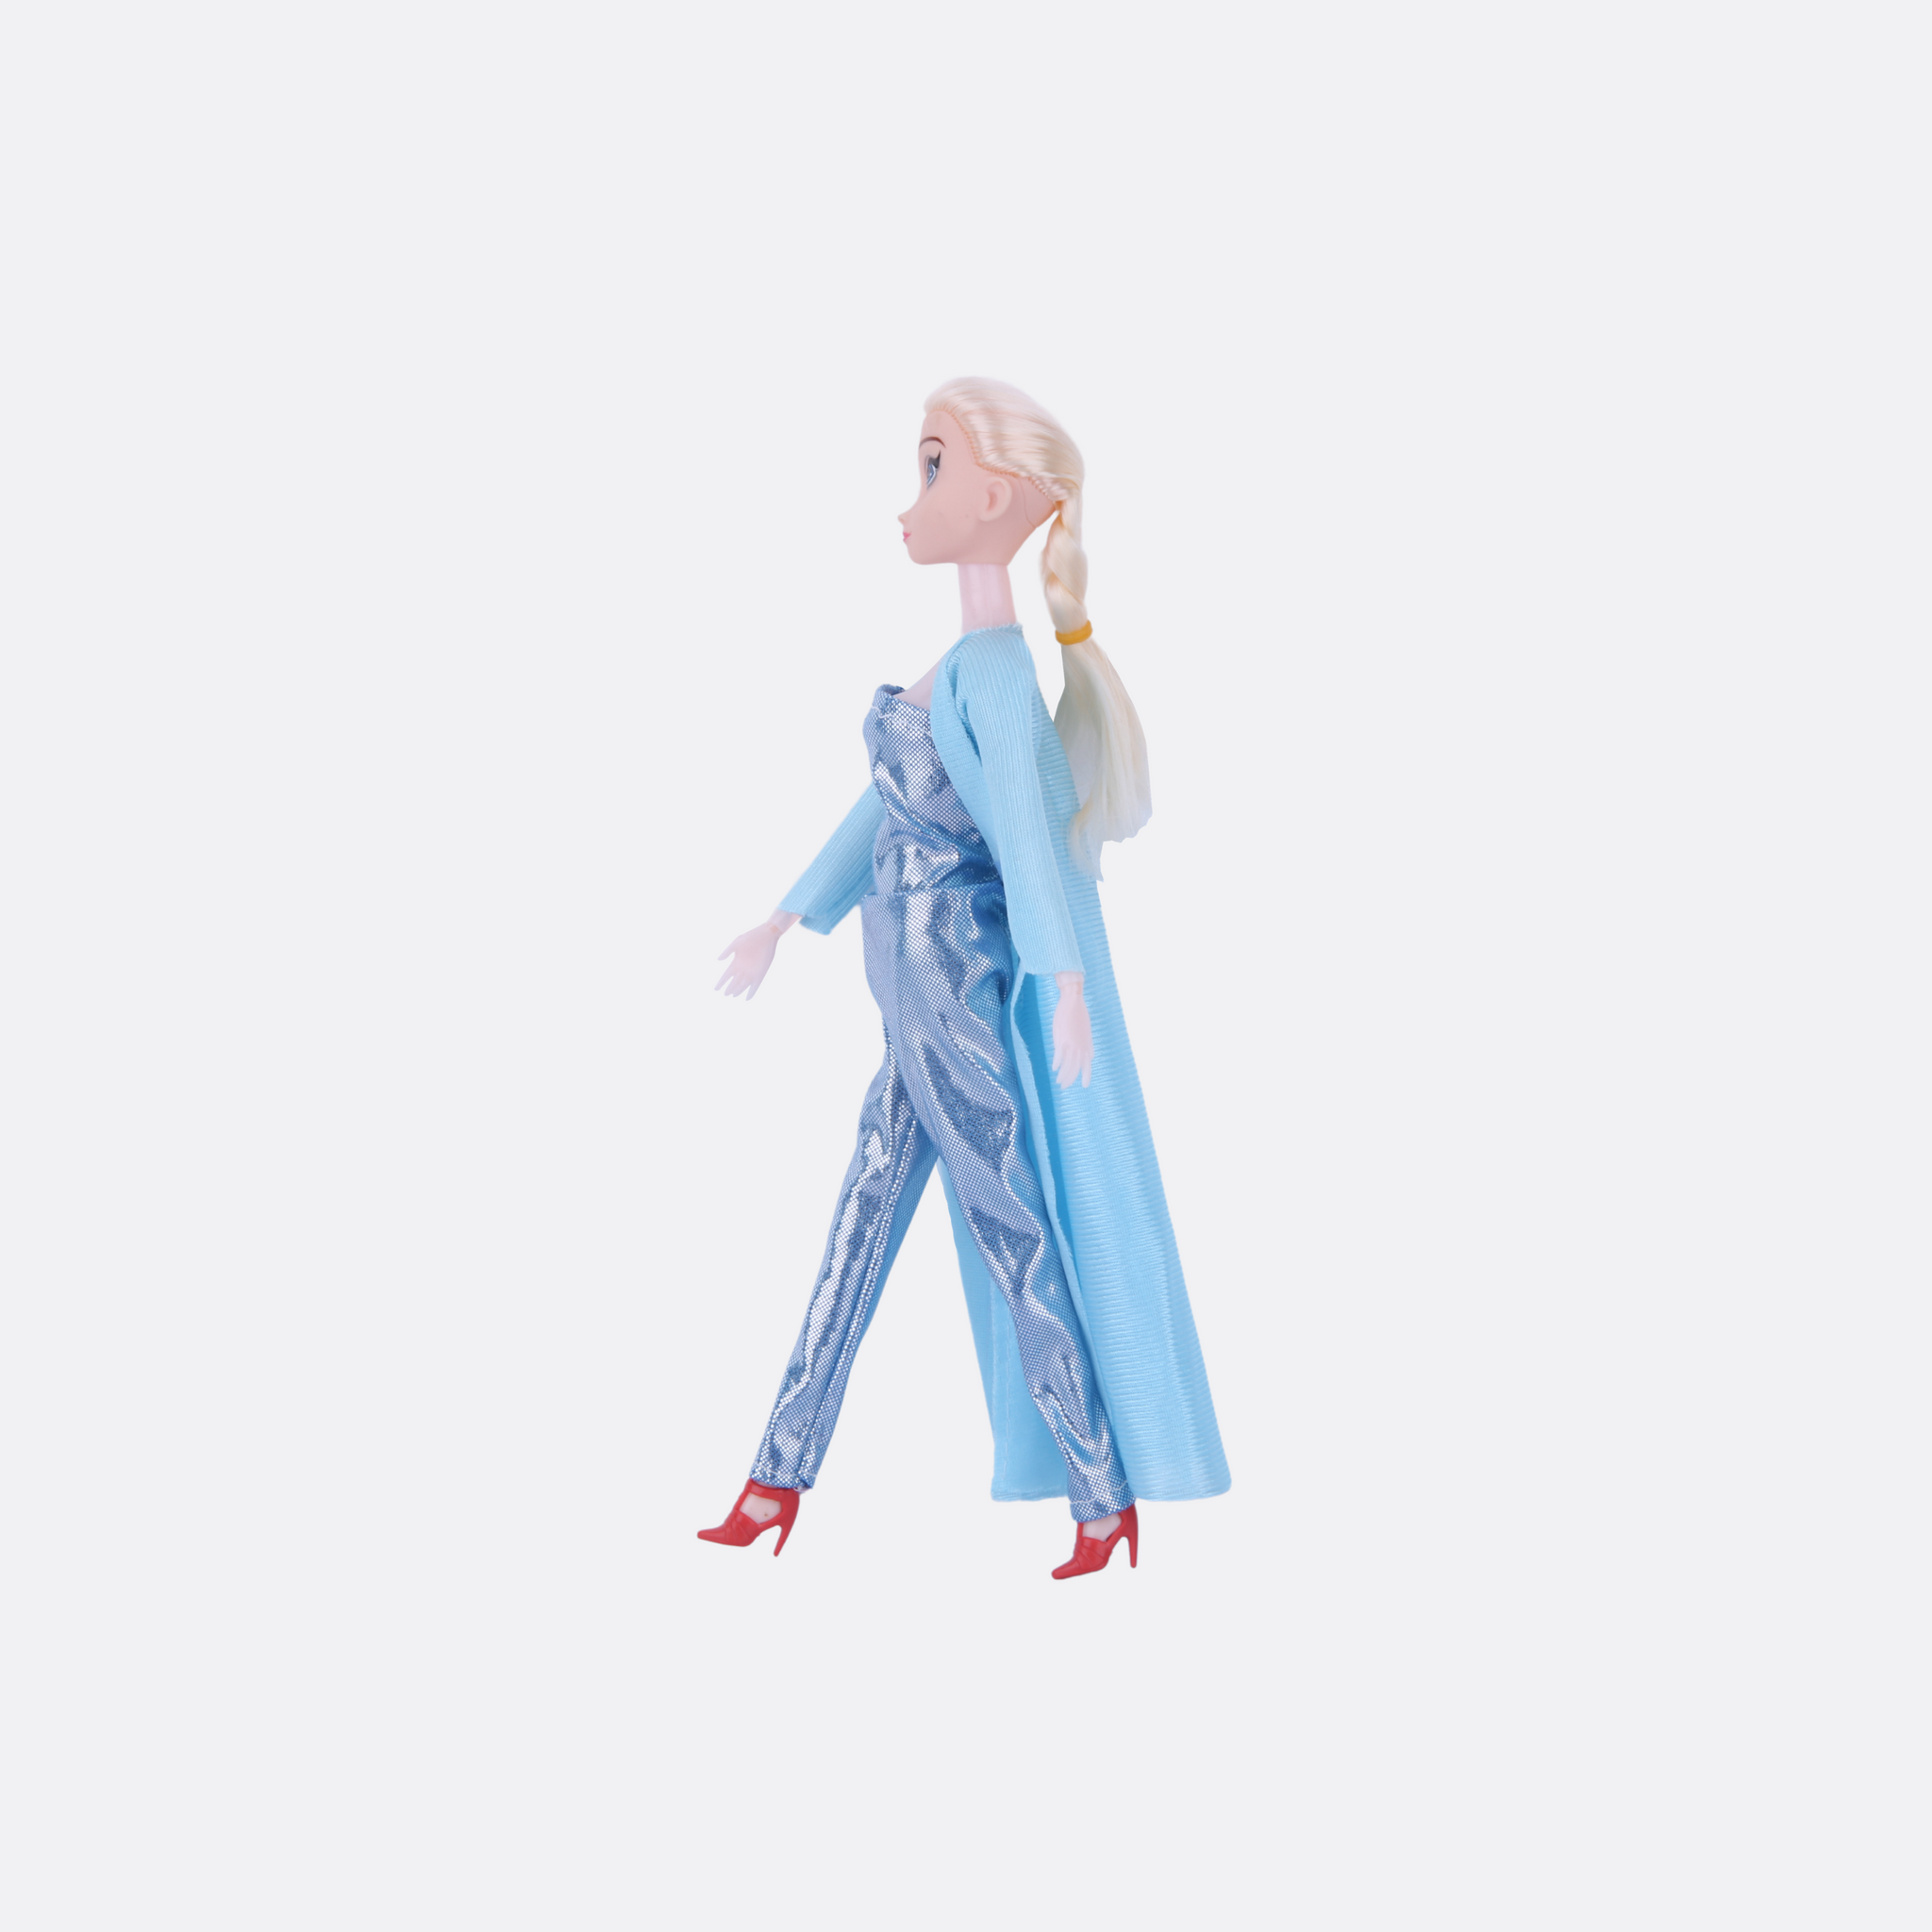 Elsa Frozen Character doll